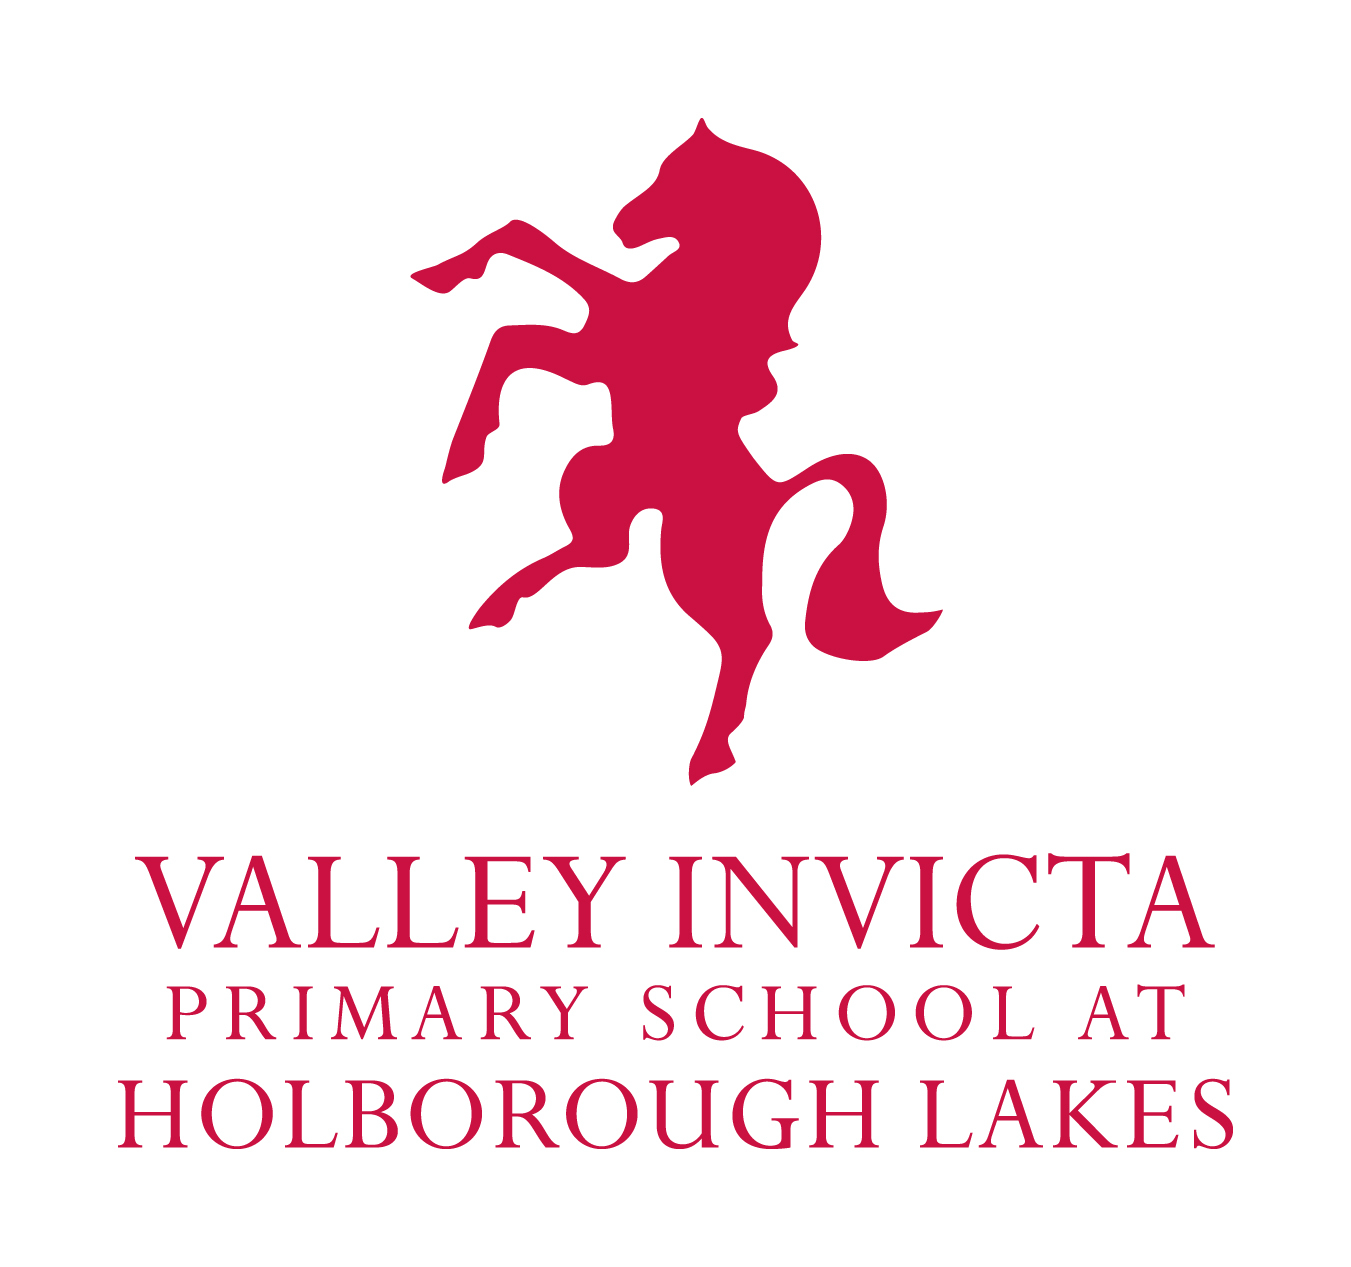 Valley Invicta Primary School at Holborough Lakes